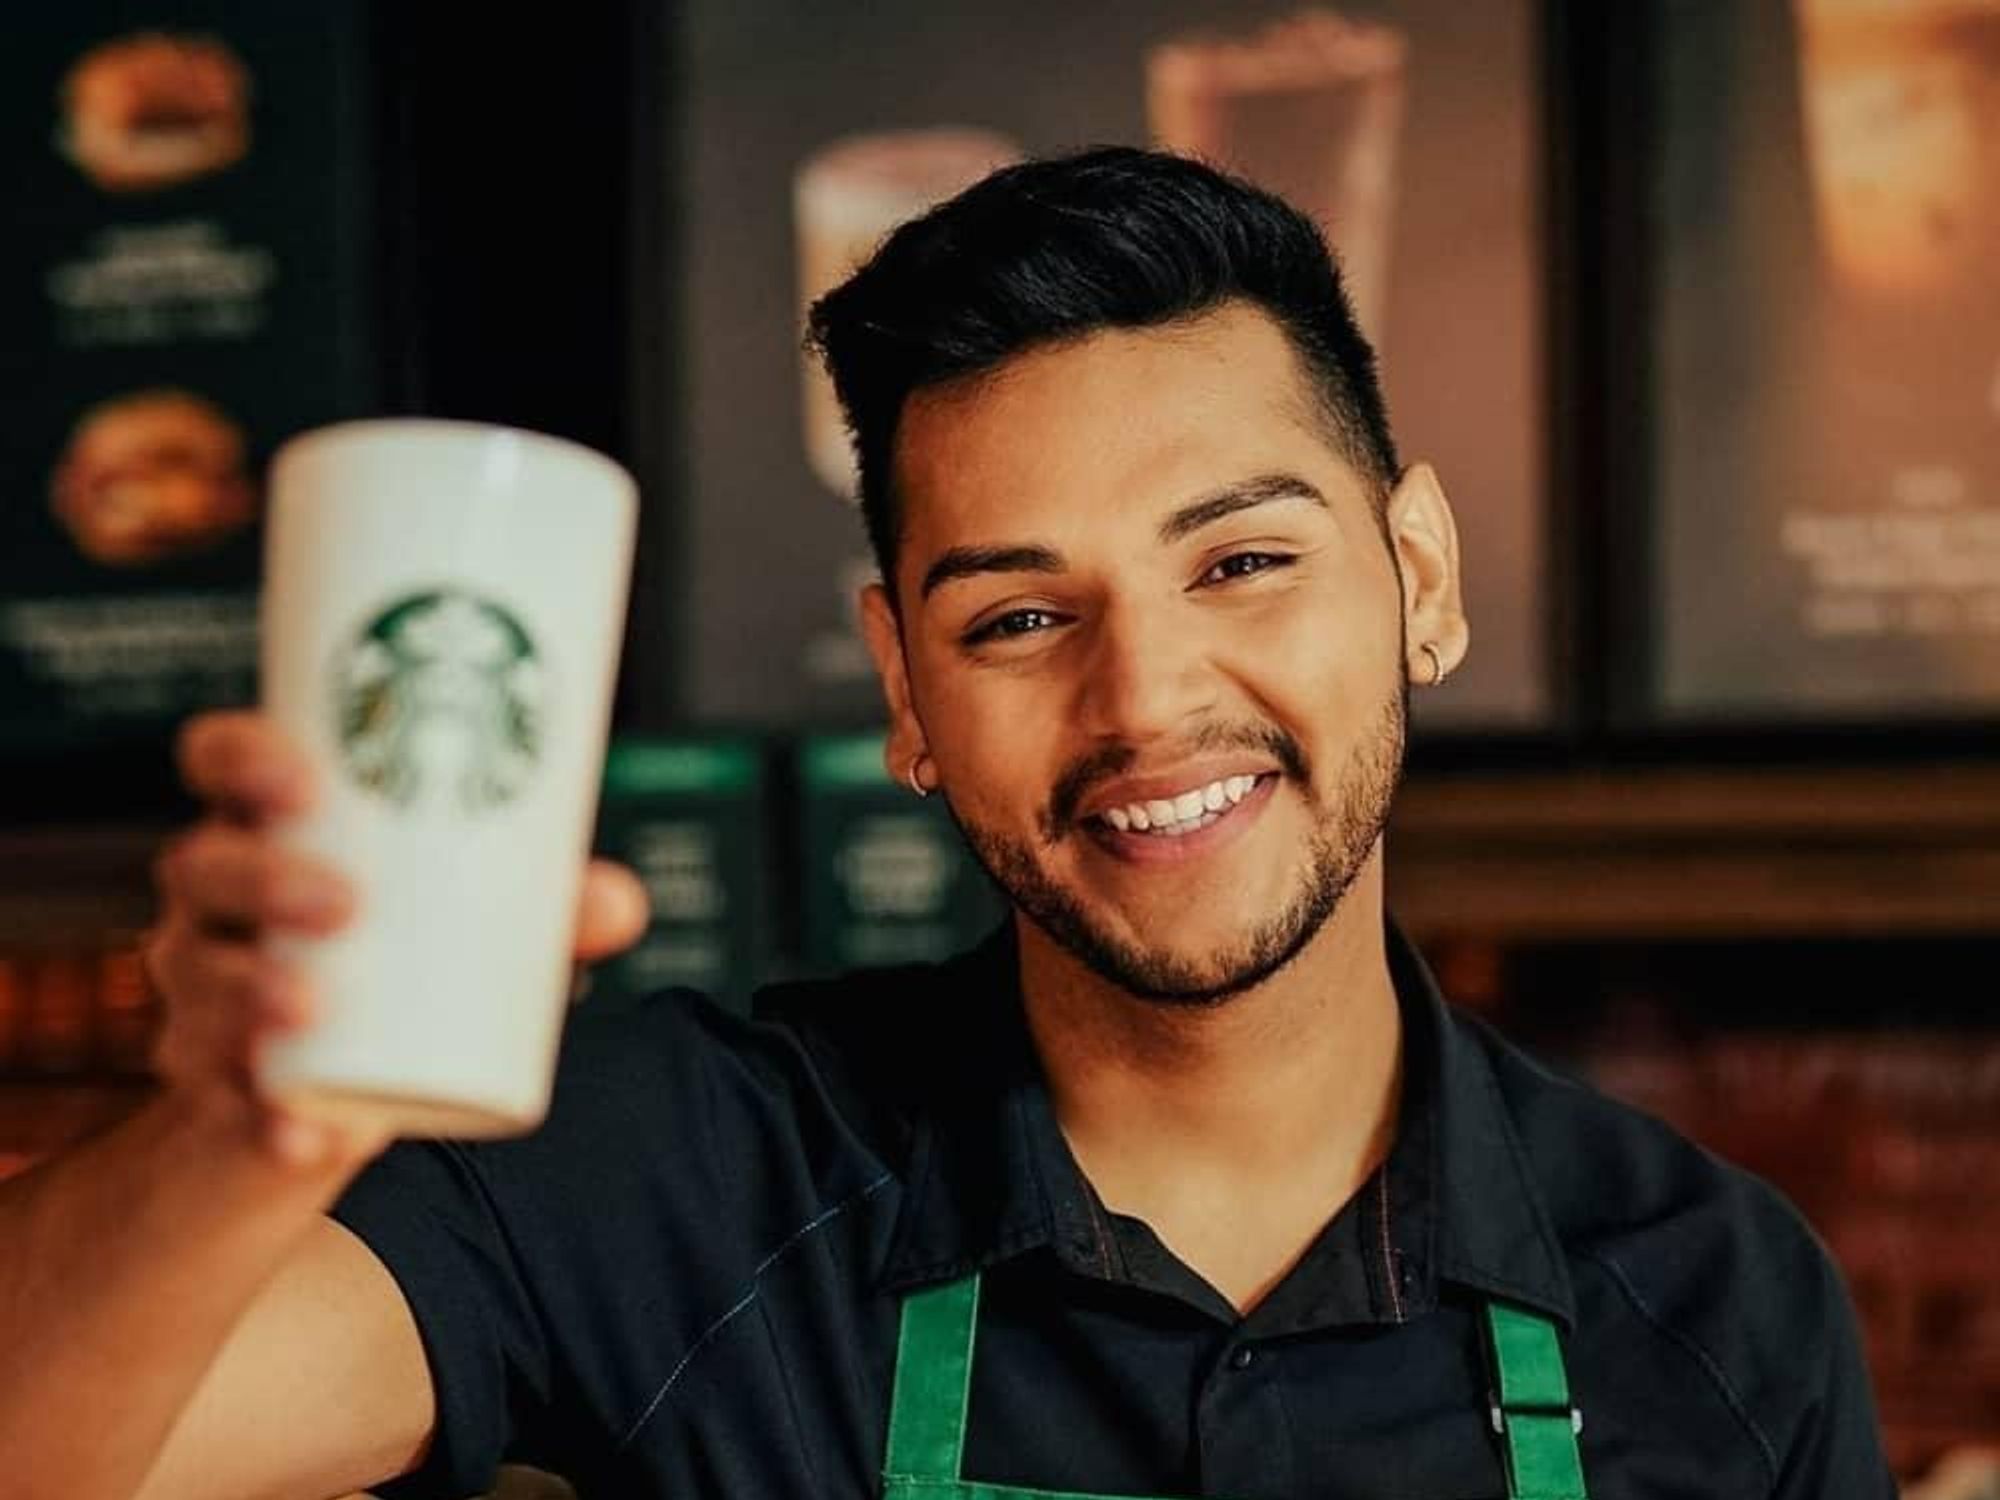 Starbucks worker